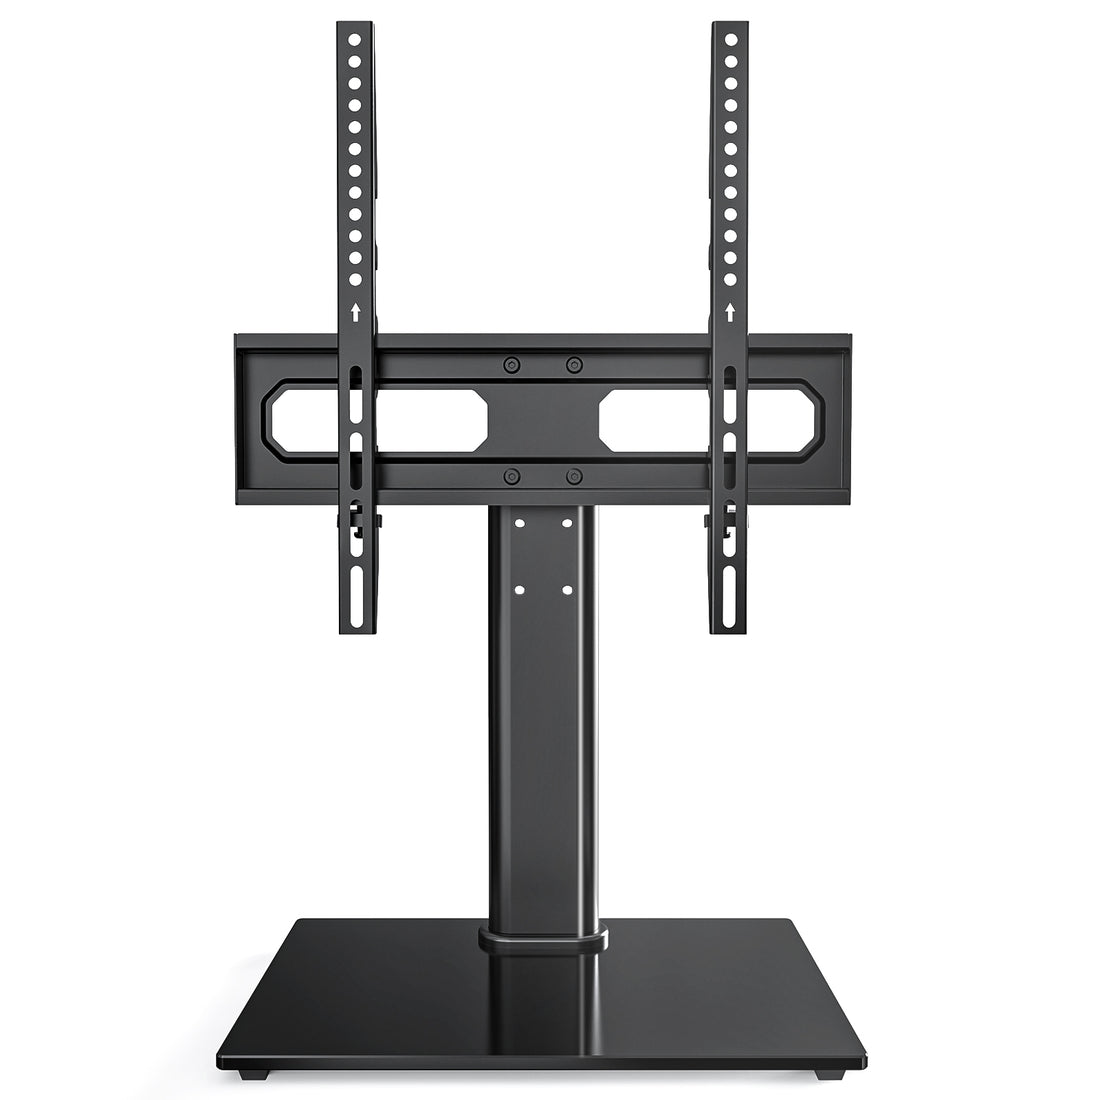 Universal Rotating Tv Stand, 3 Height Adjustable